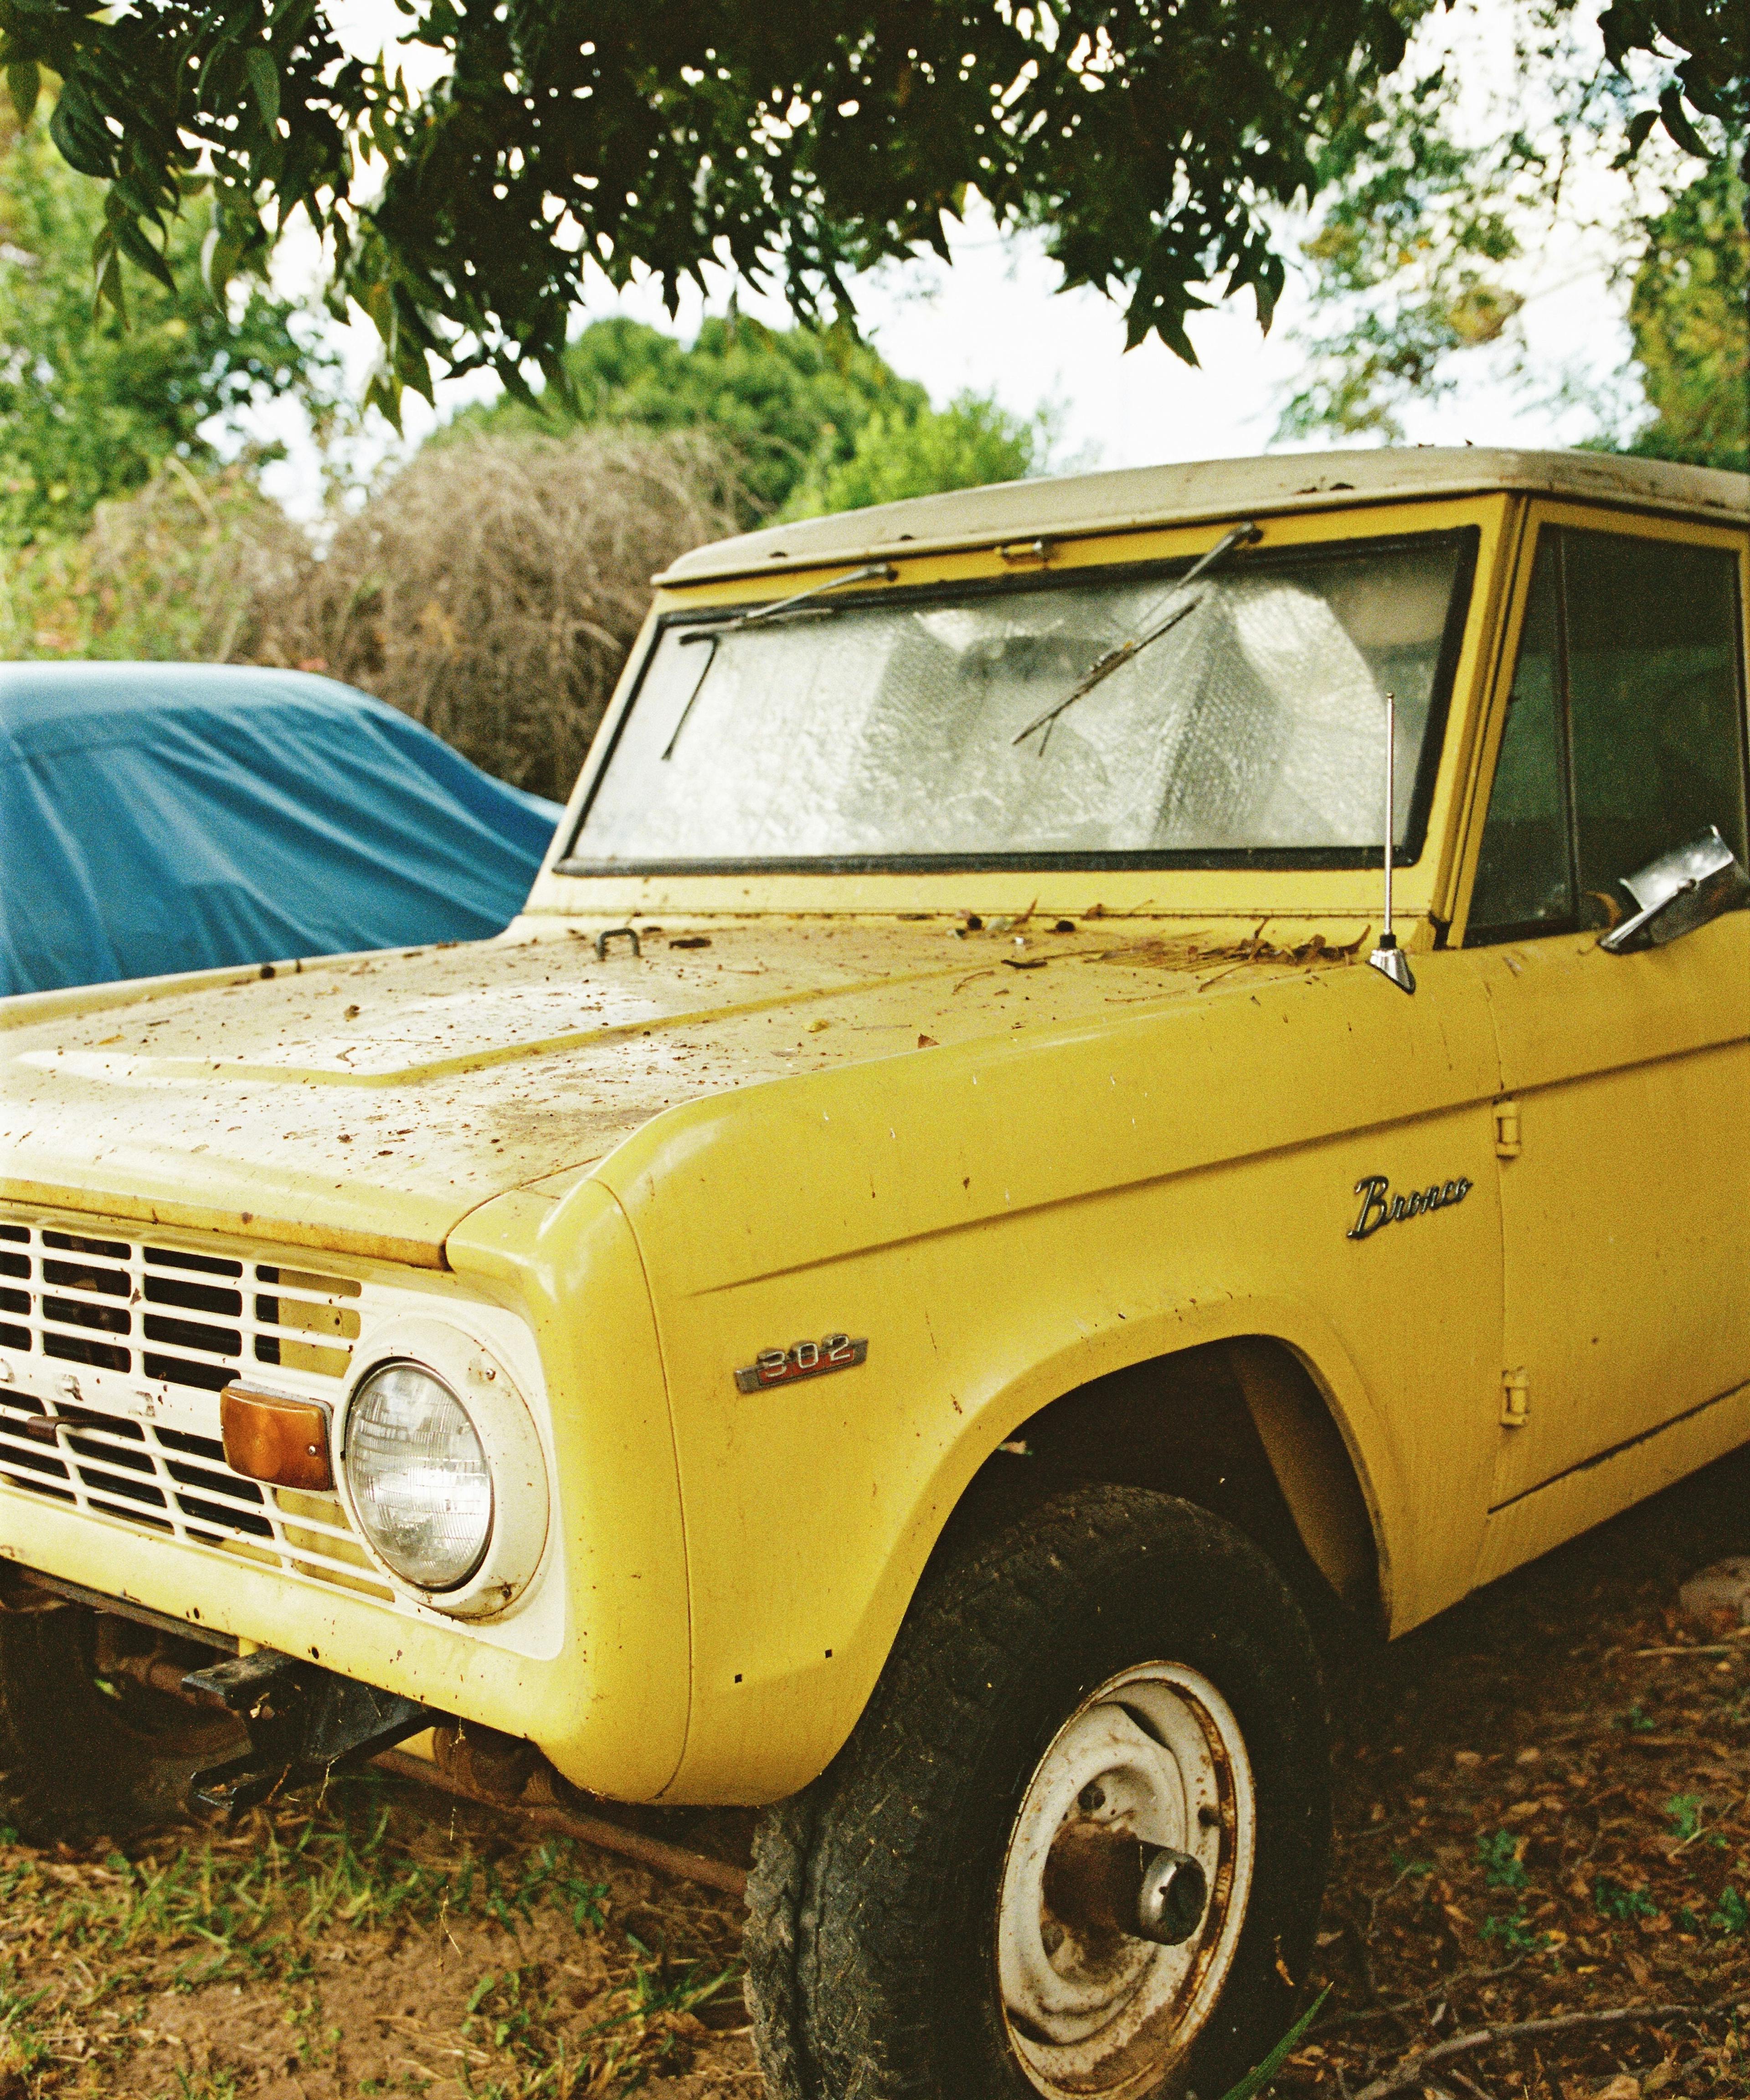 Vintage yellow Bronco captured on film by Natalie Carrasco